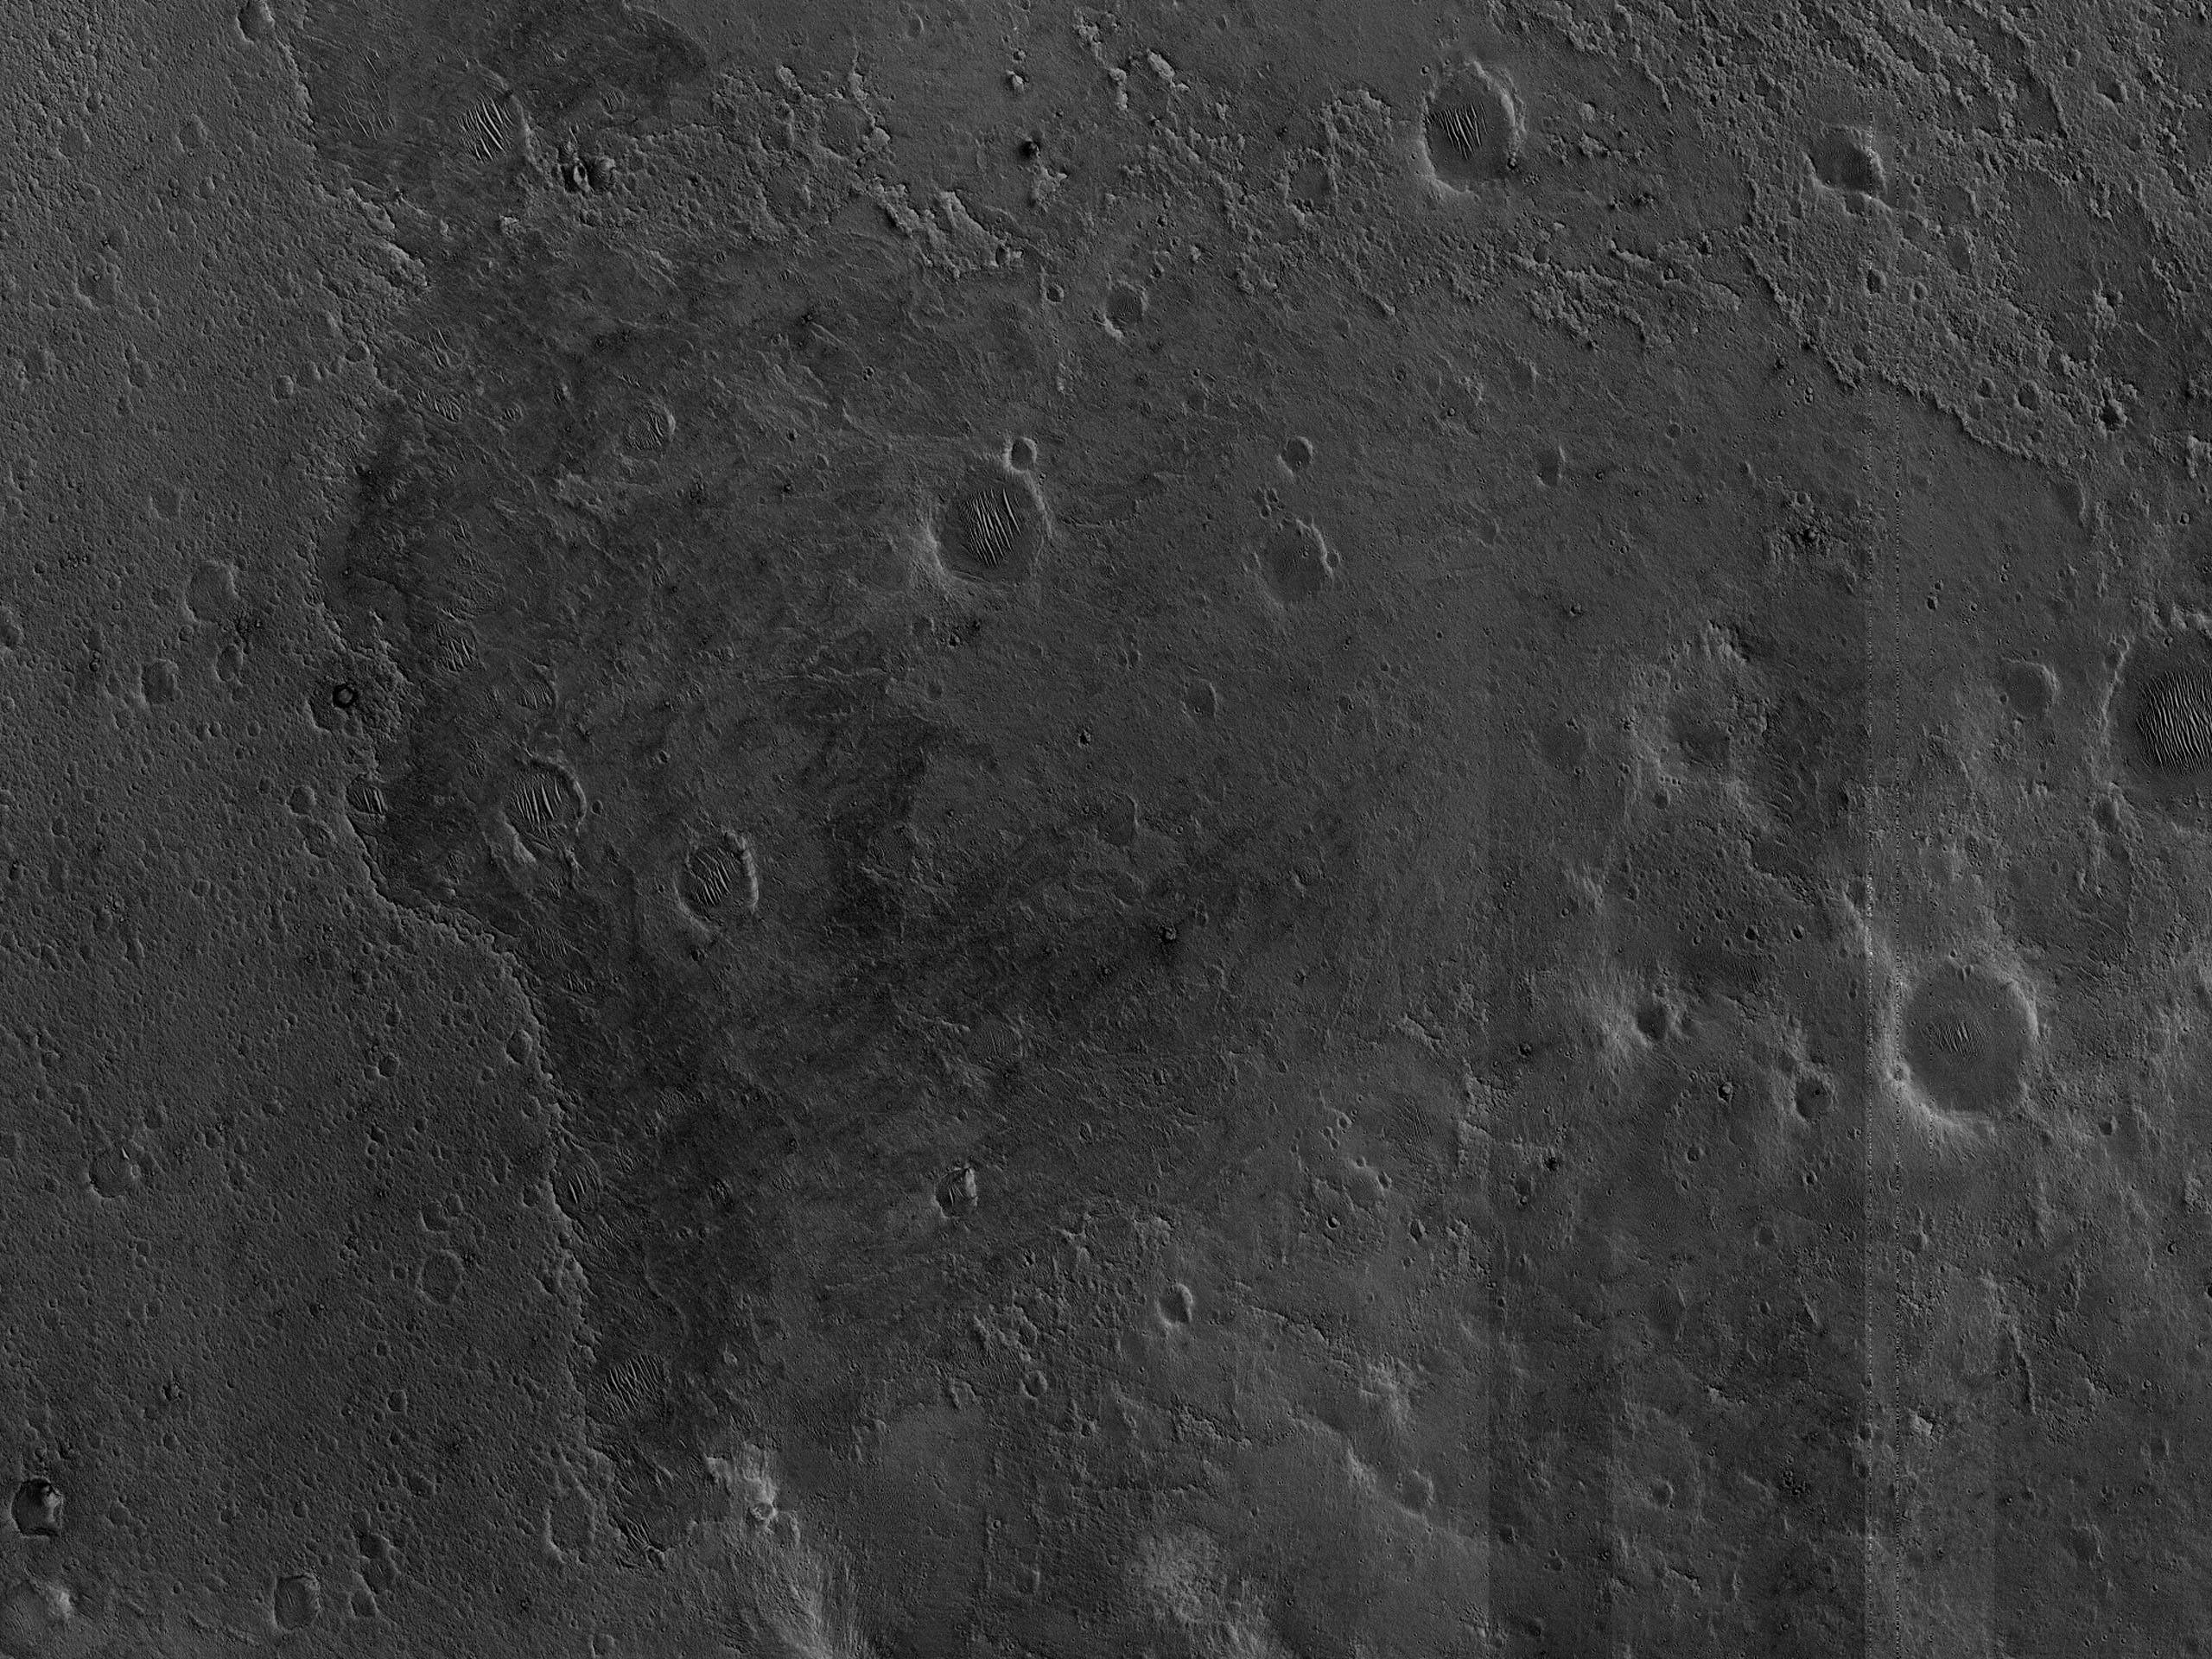 A Fan-Shaped Deposit in Camichel Crater